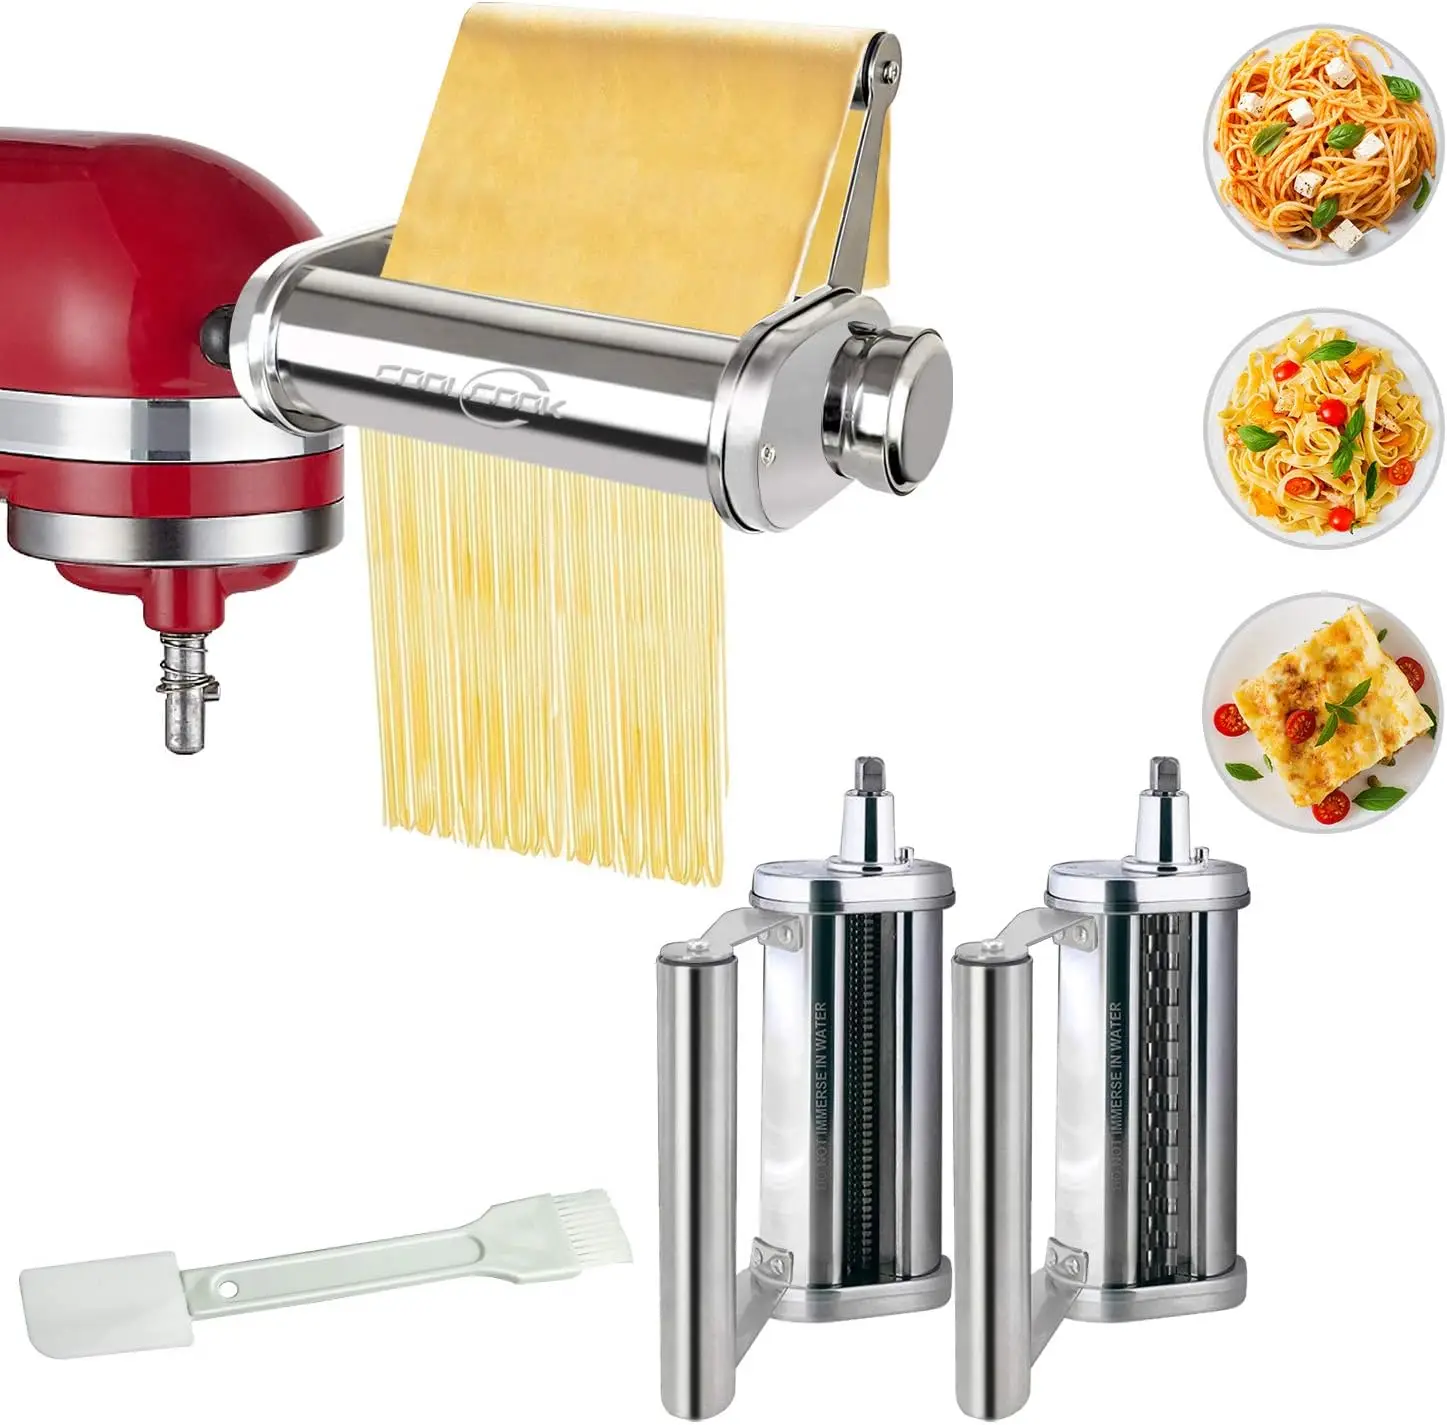 Pasta Maker Attachment Set for KitchenAid Stand Mixer with Unique